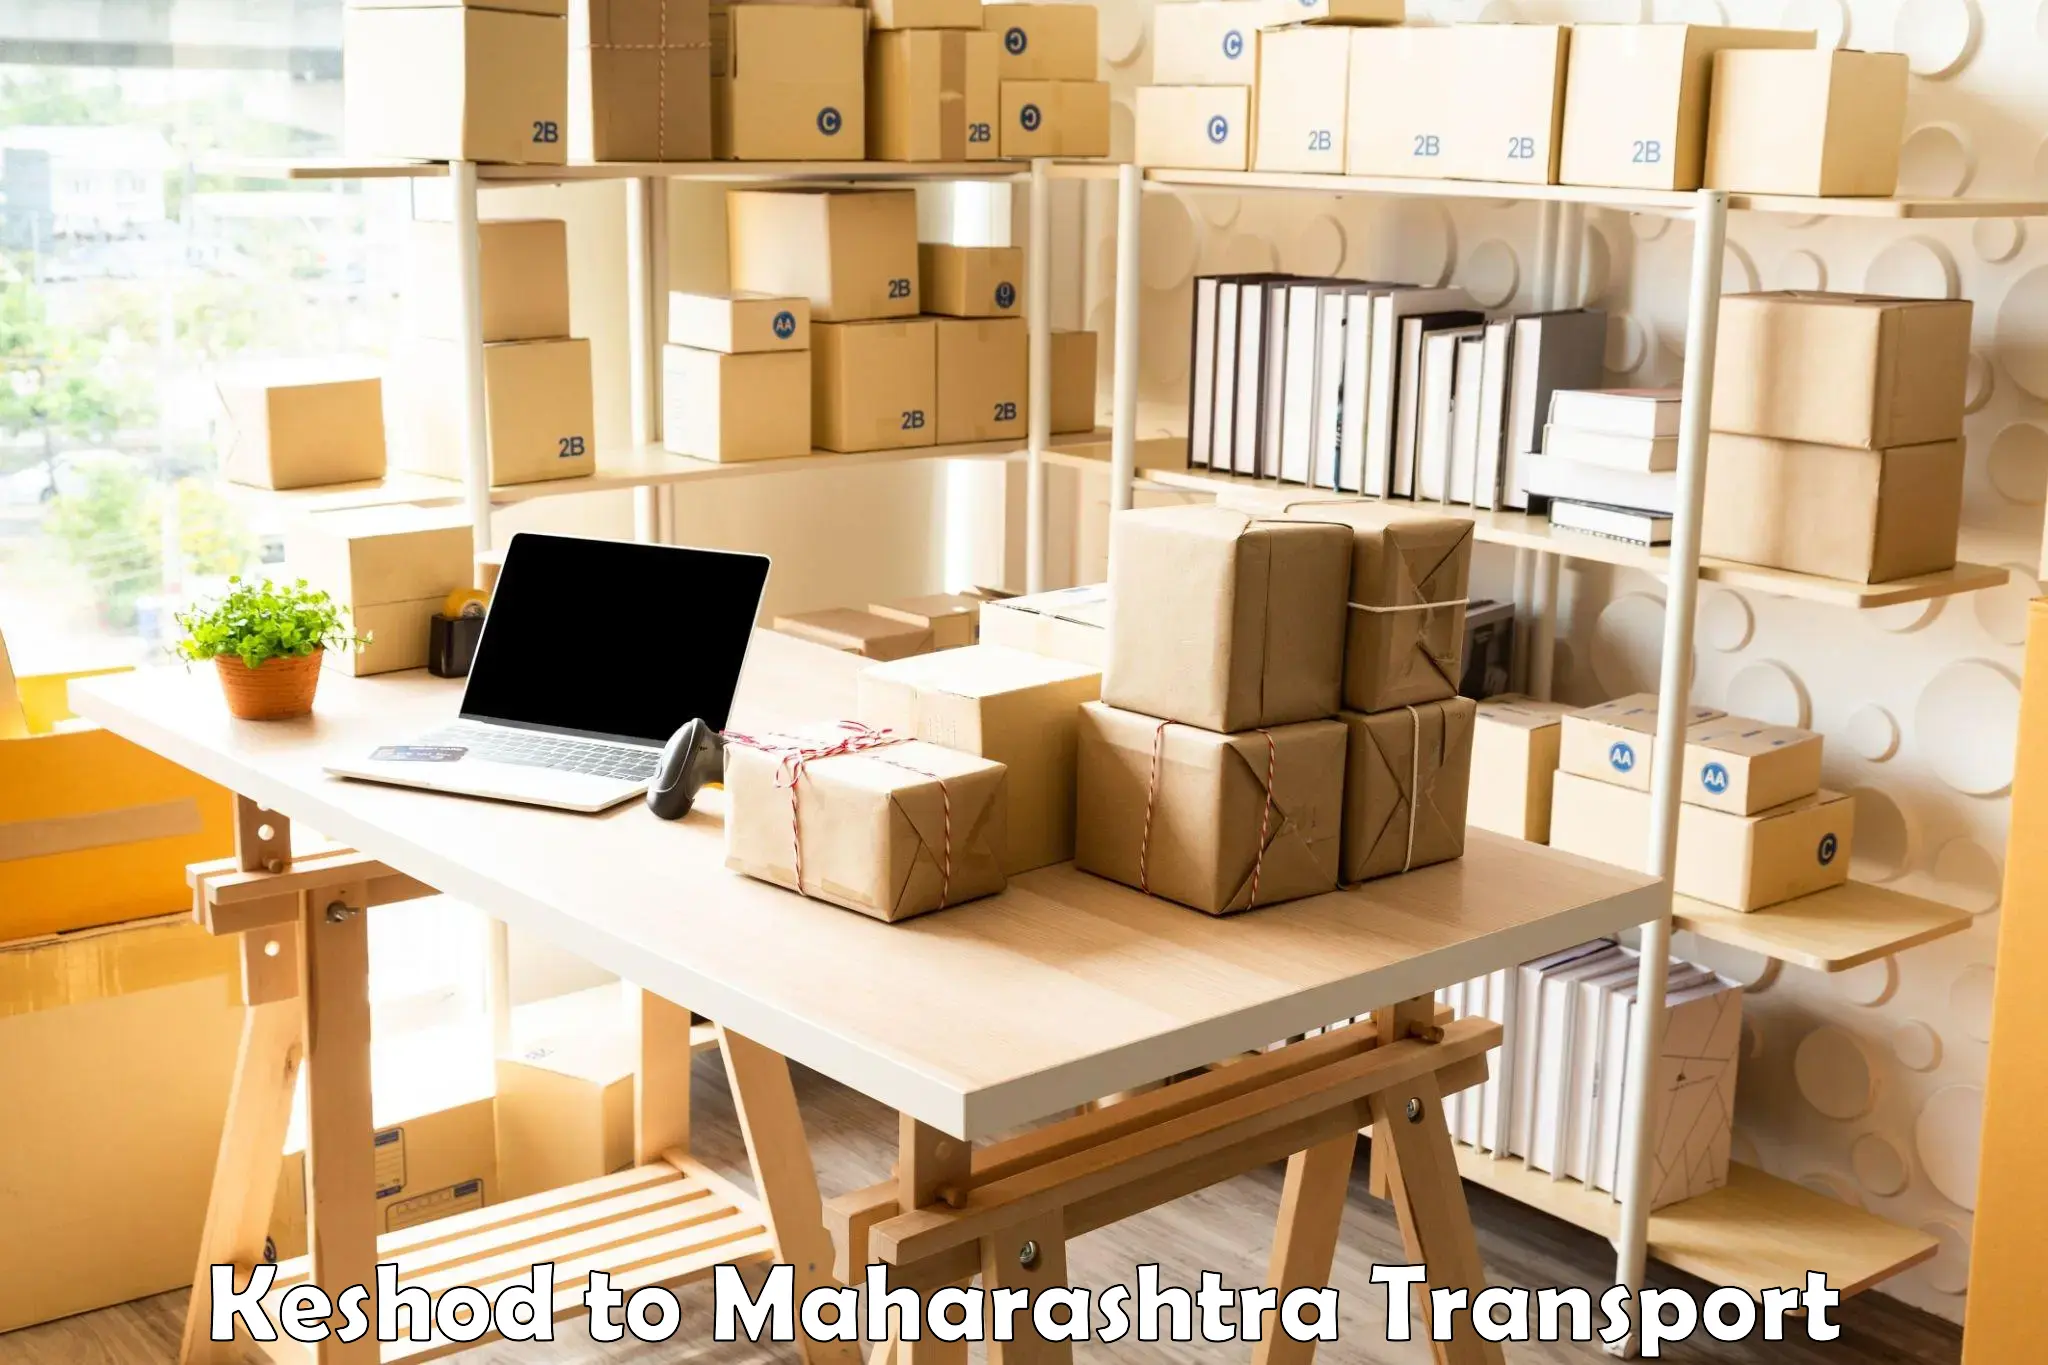 Goods delivery service Keshod to Mahabaleshwar